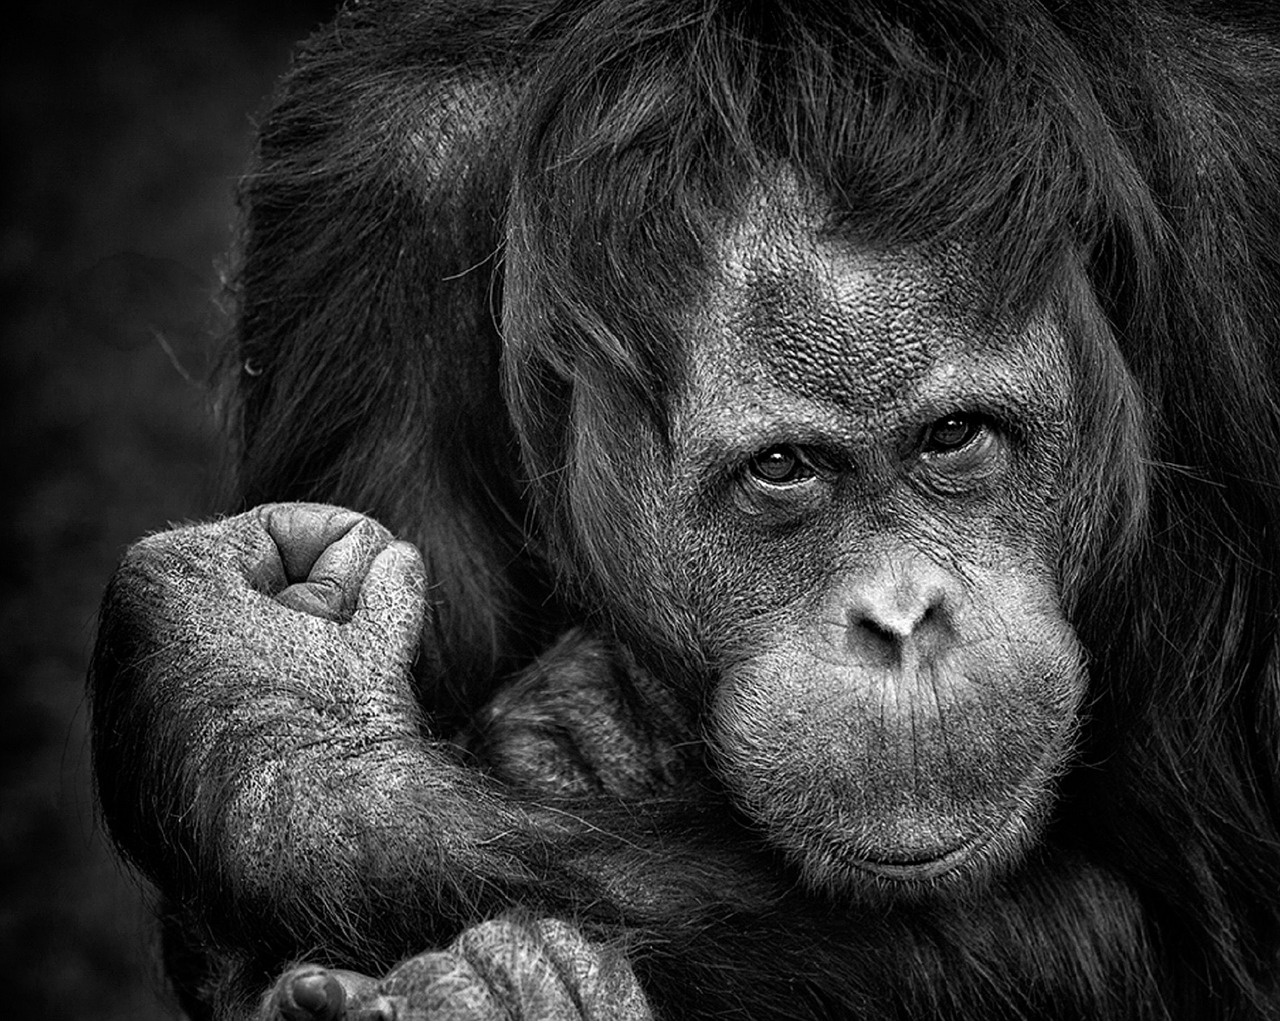 chimpanzee monkey portrait free photo